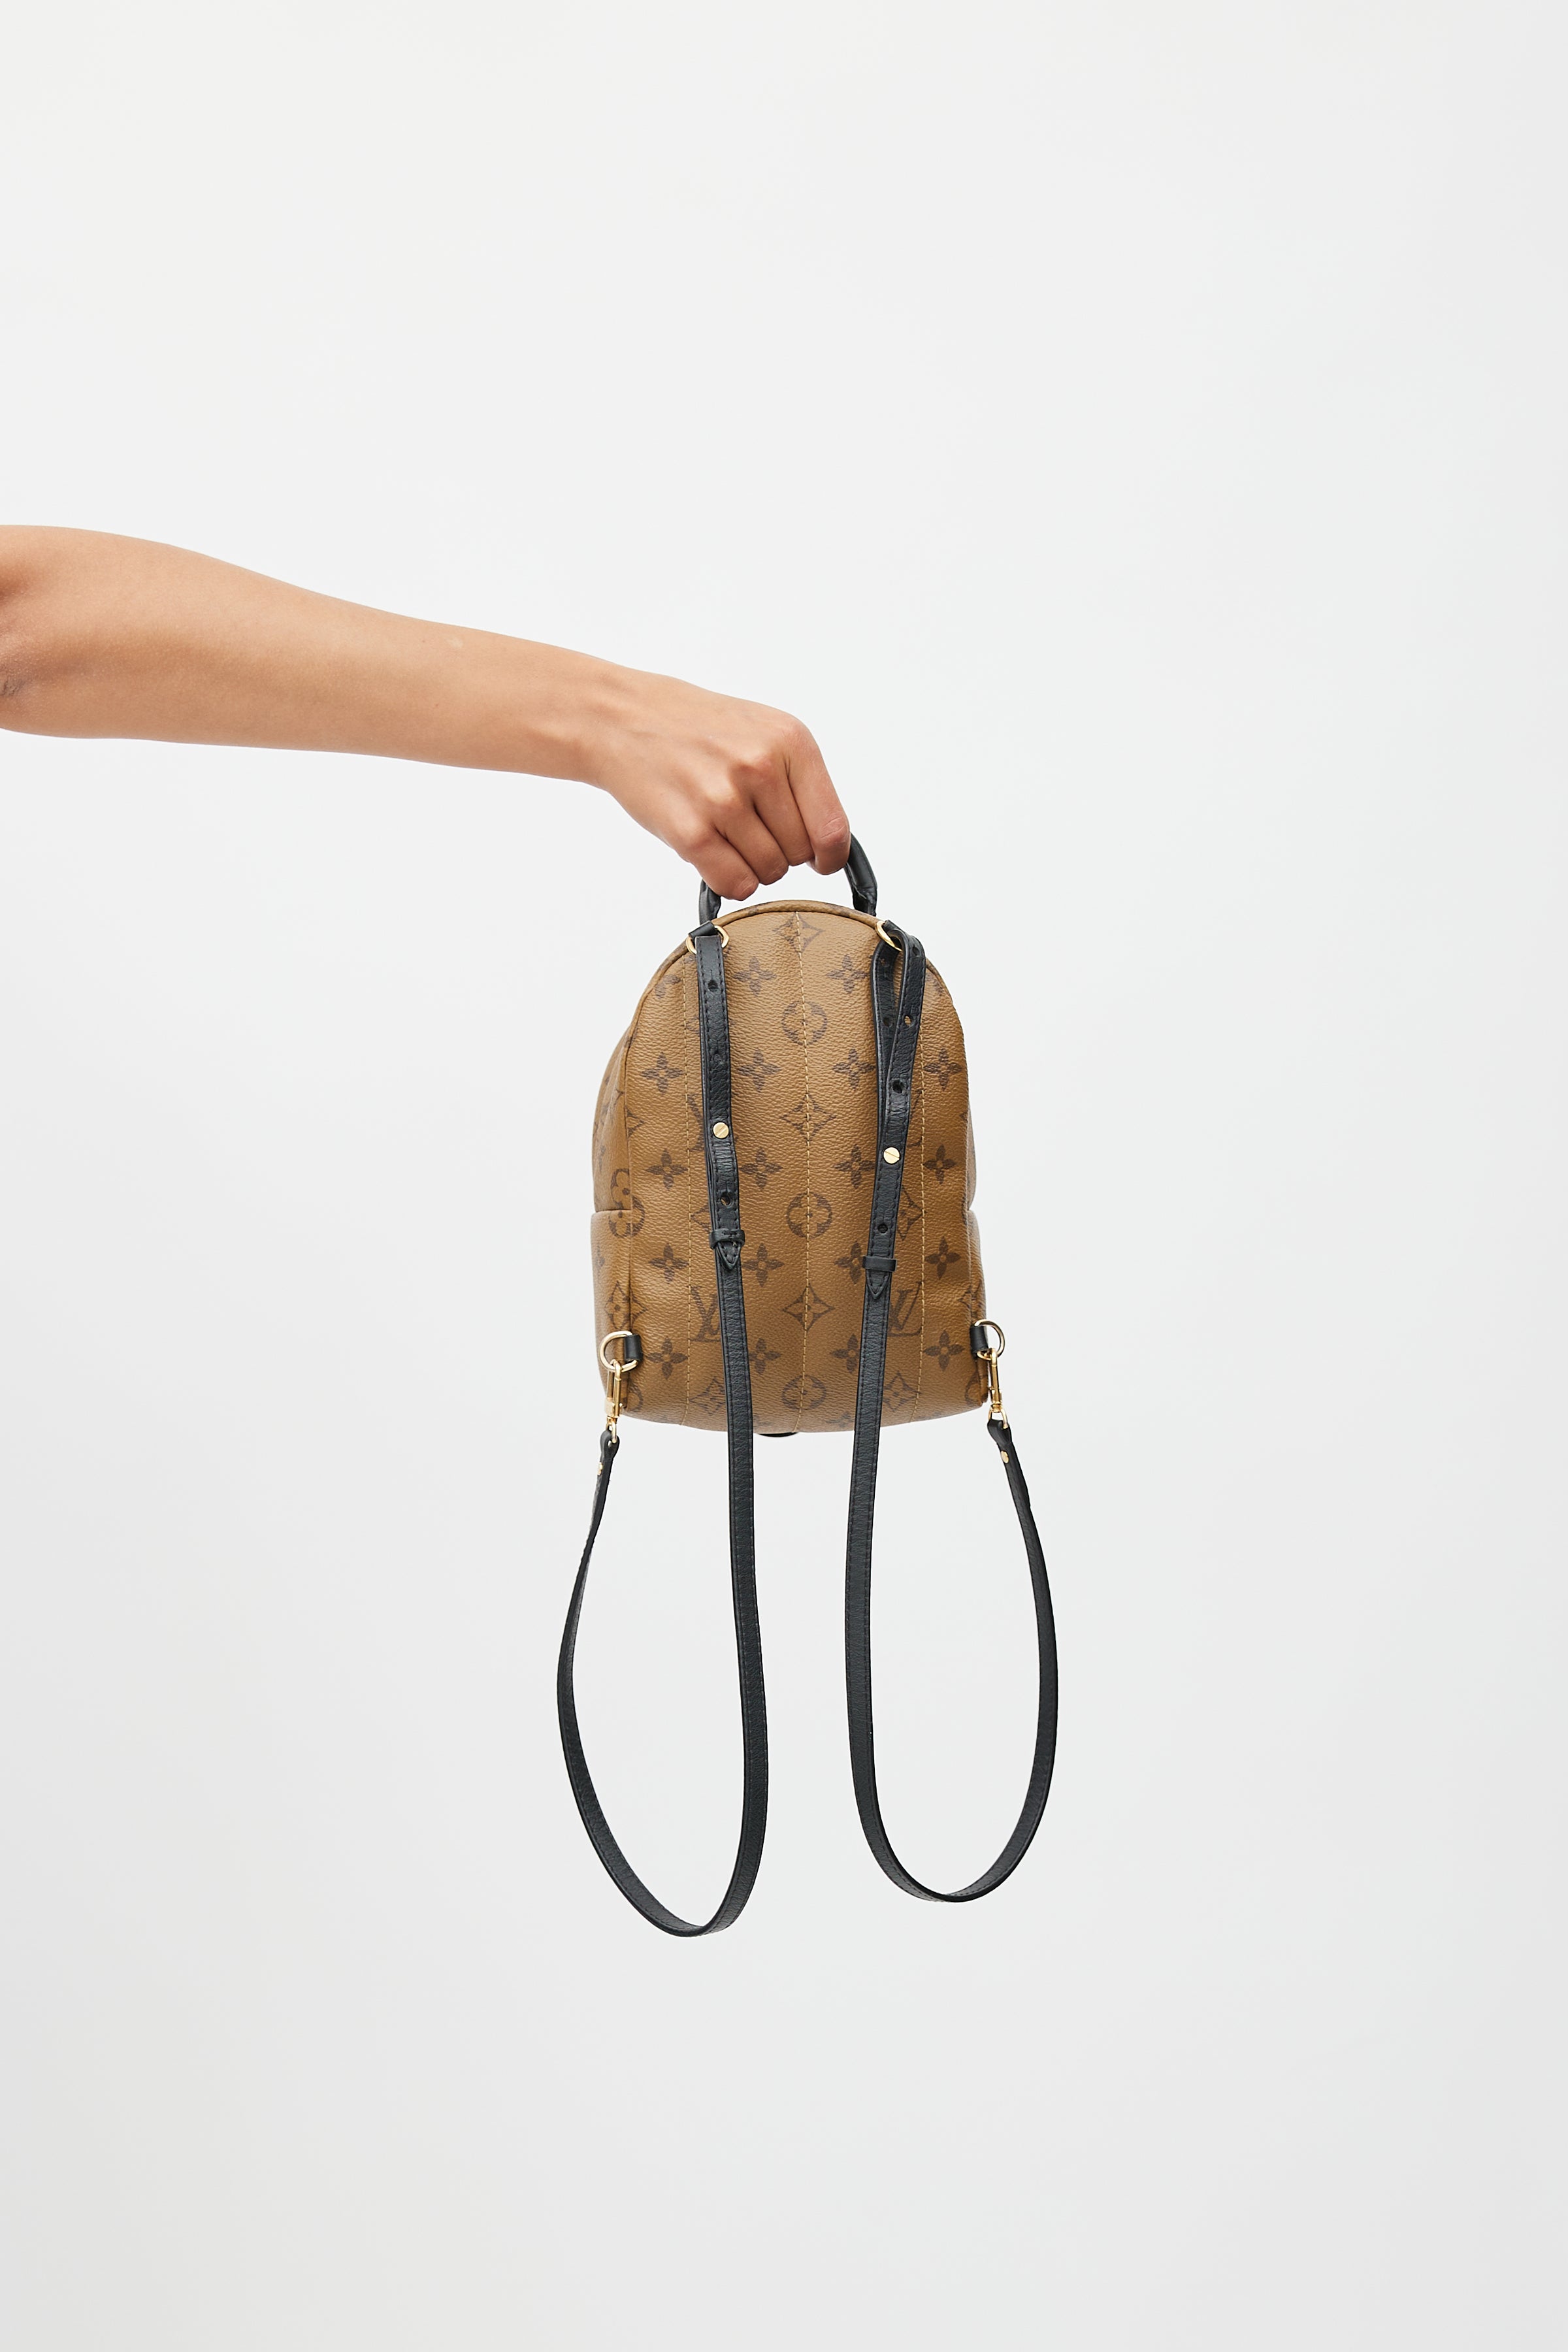 Louis Vuitton Palm Spring PM Reverse Backpack-Louis Vuitton Palm